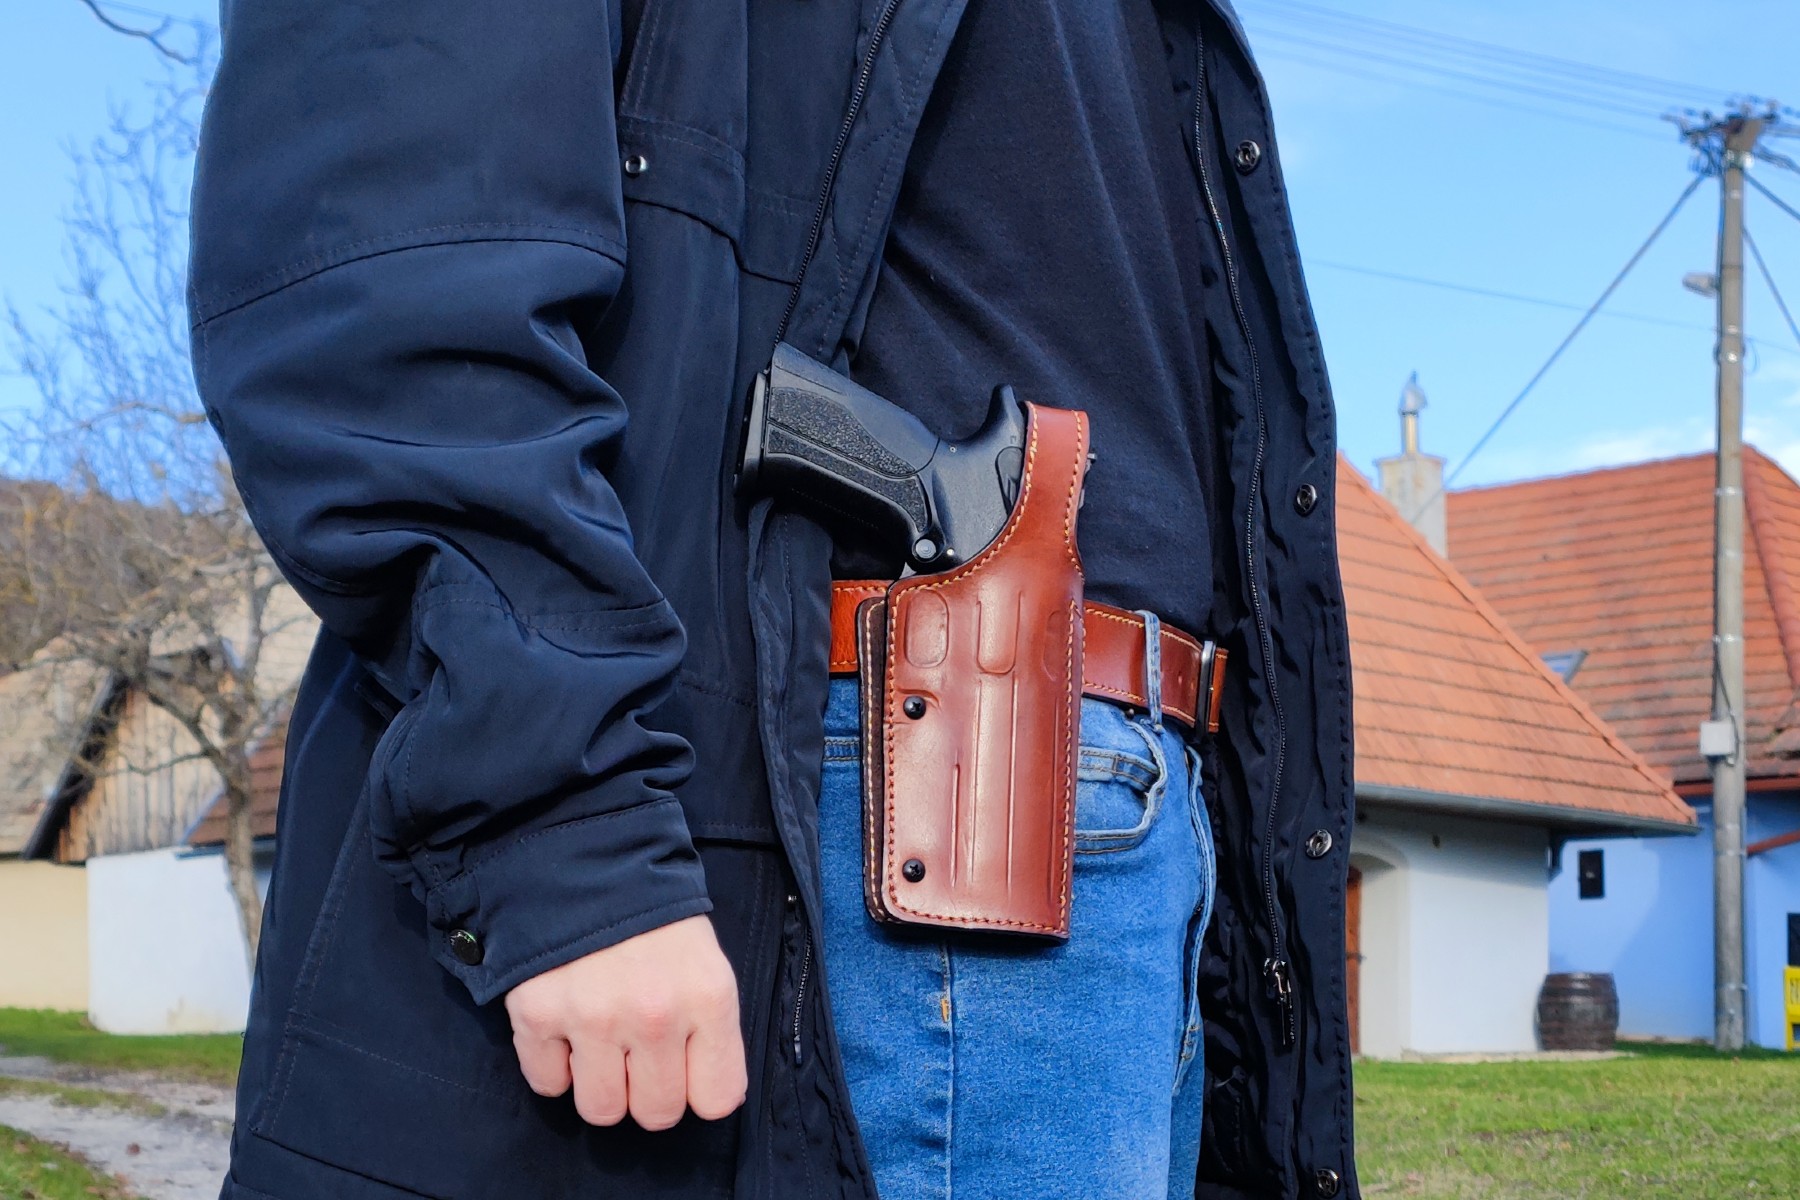 owb concealed carry holster